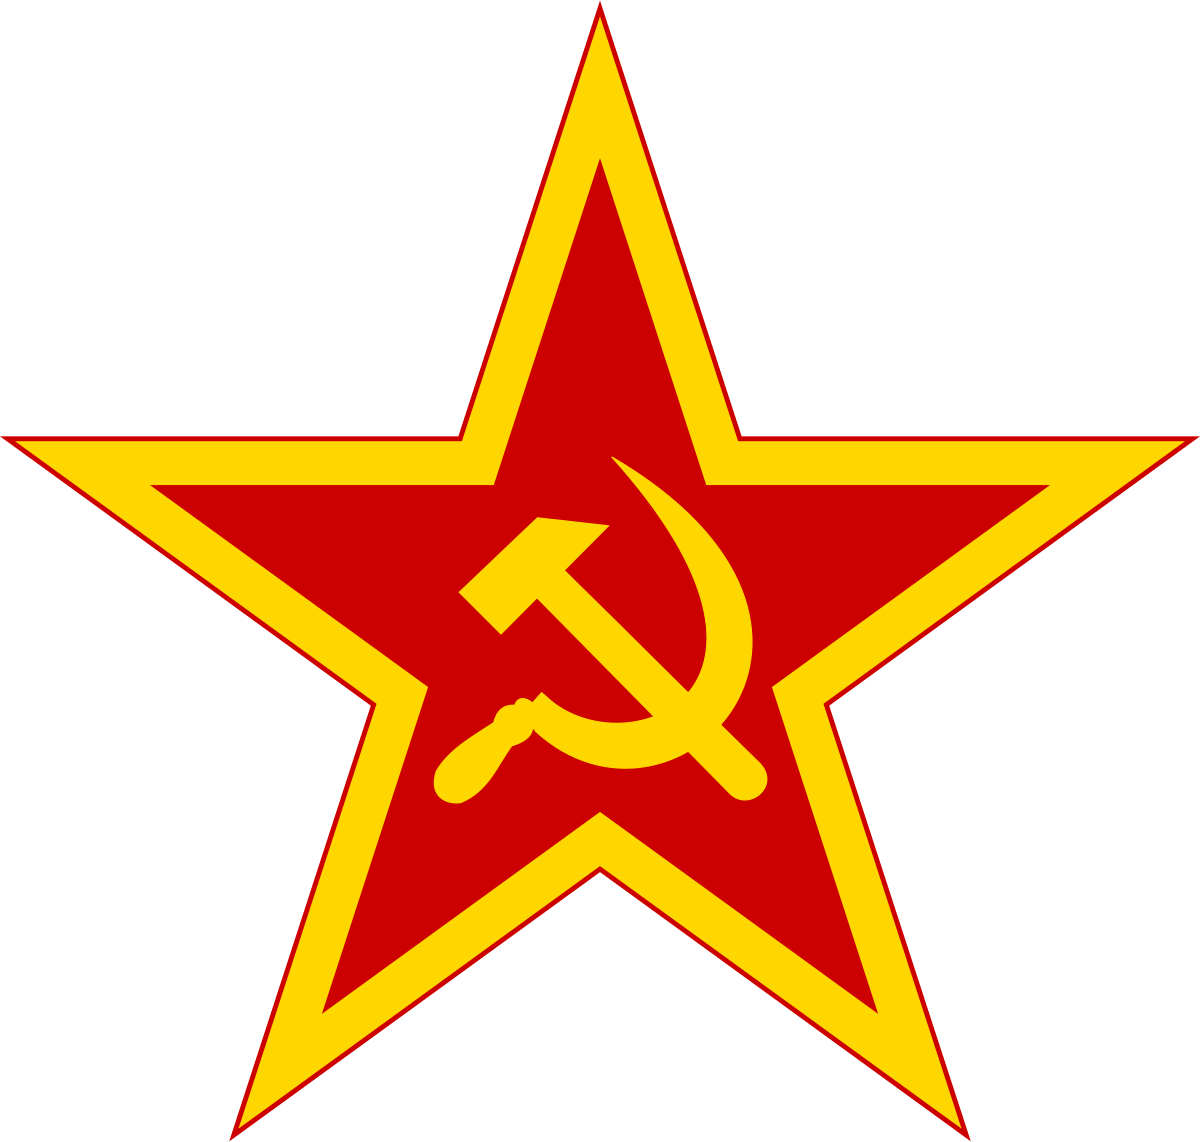 Communism - Wikipedia